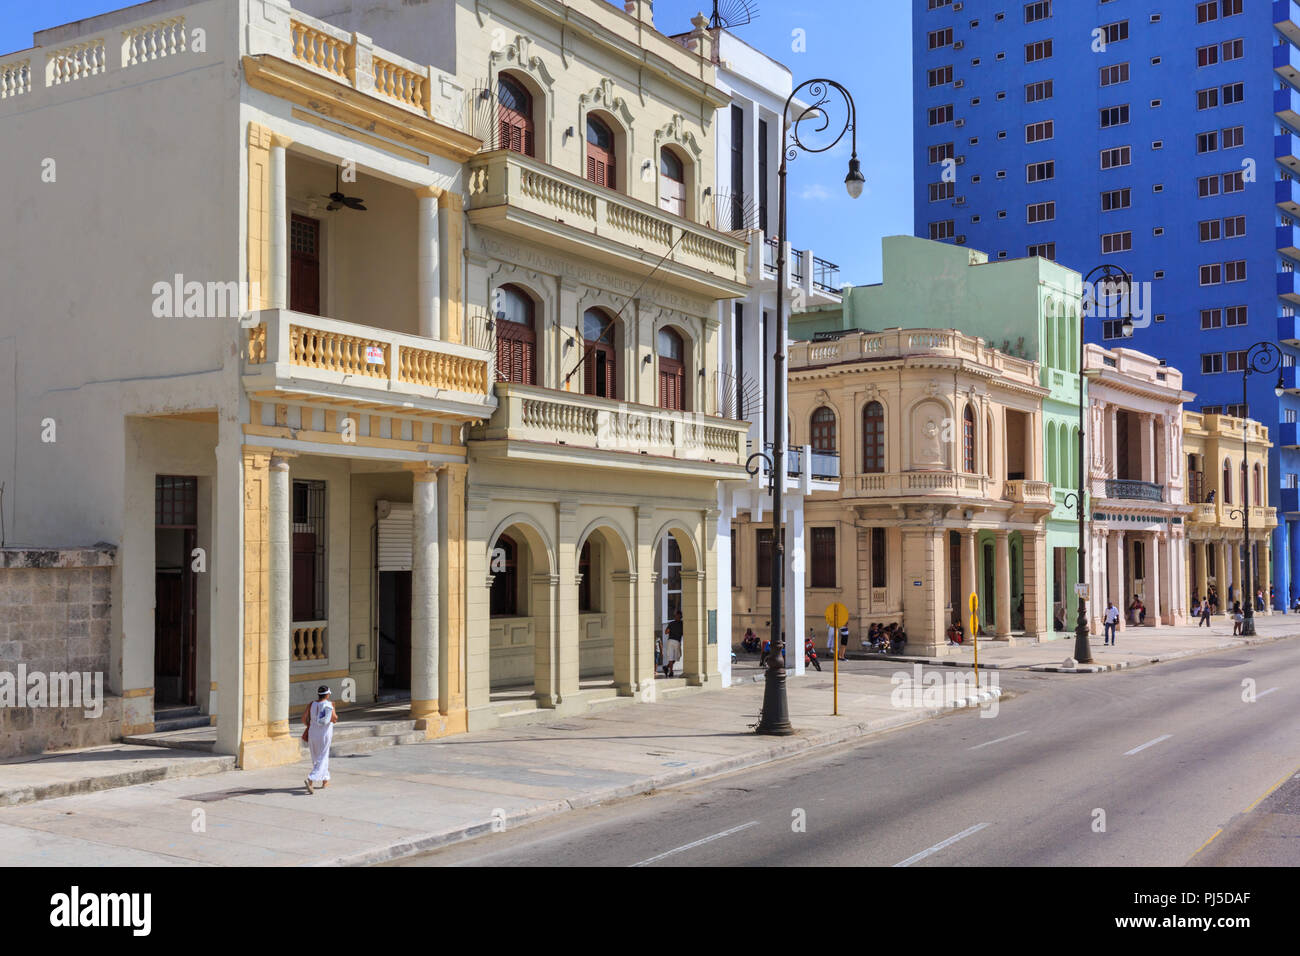 Restored historic buildings, architecture along the Malecon, Havana, Cuba Stock Photo